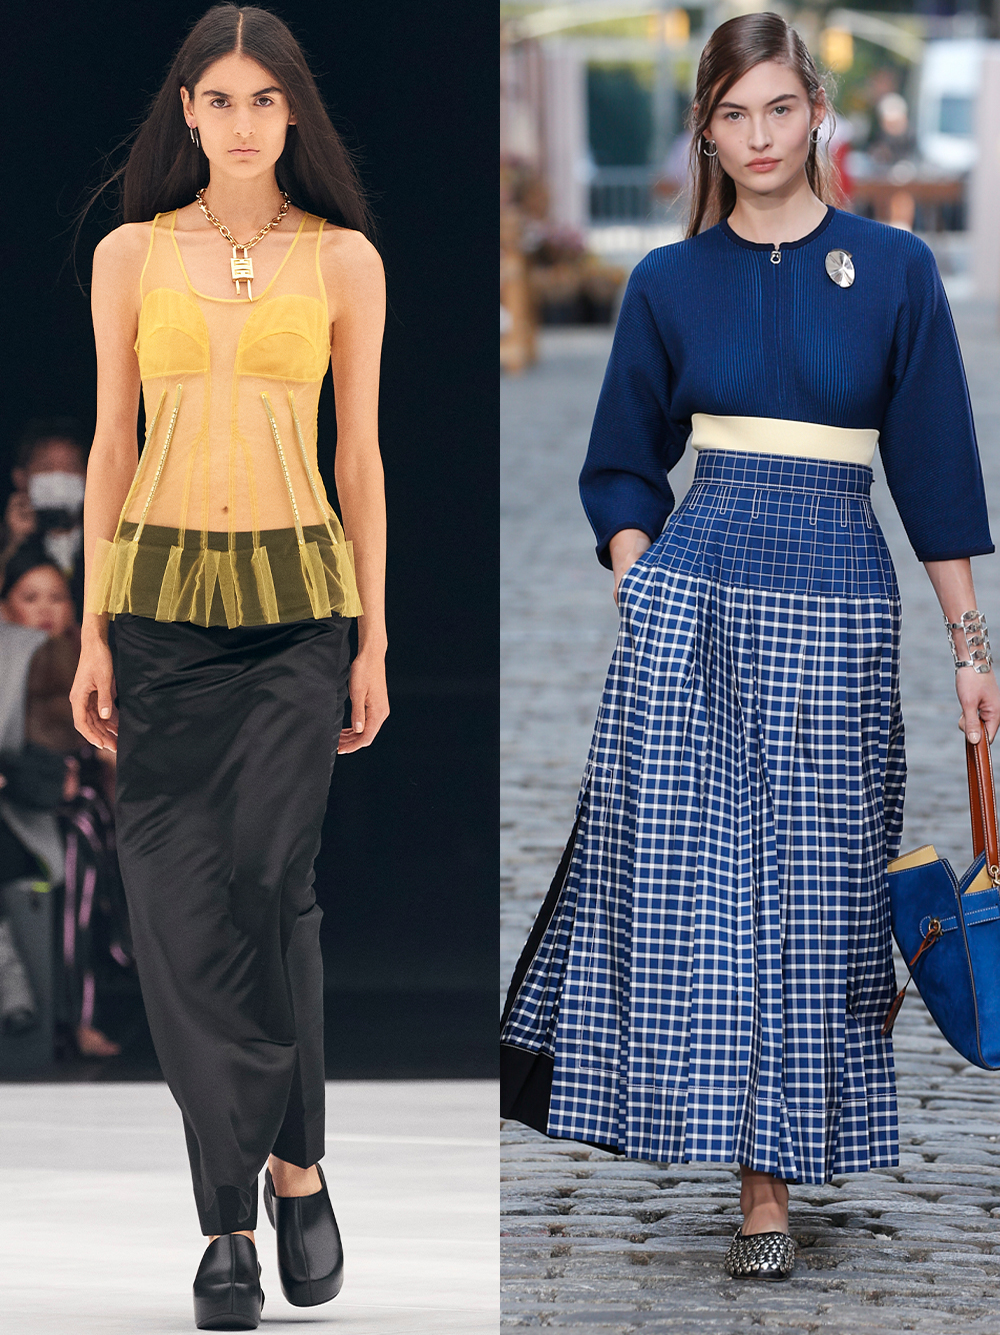 Fashion editor skirt trends